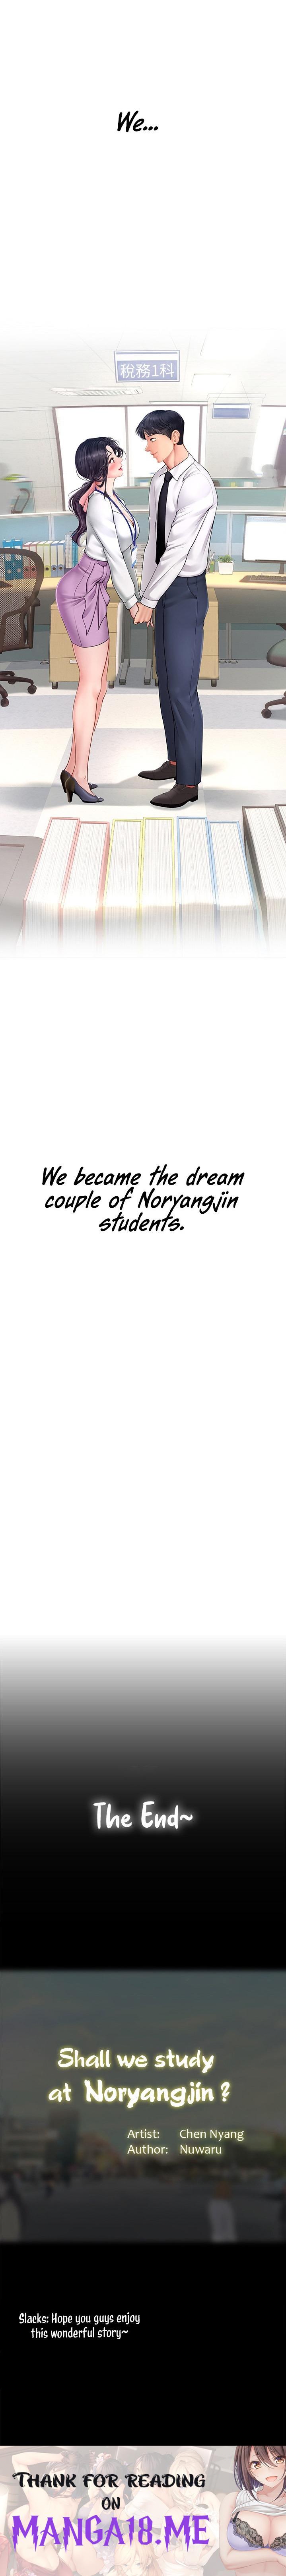 Should I Study at Noryangjin? - Chapter 101 Page 20